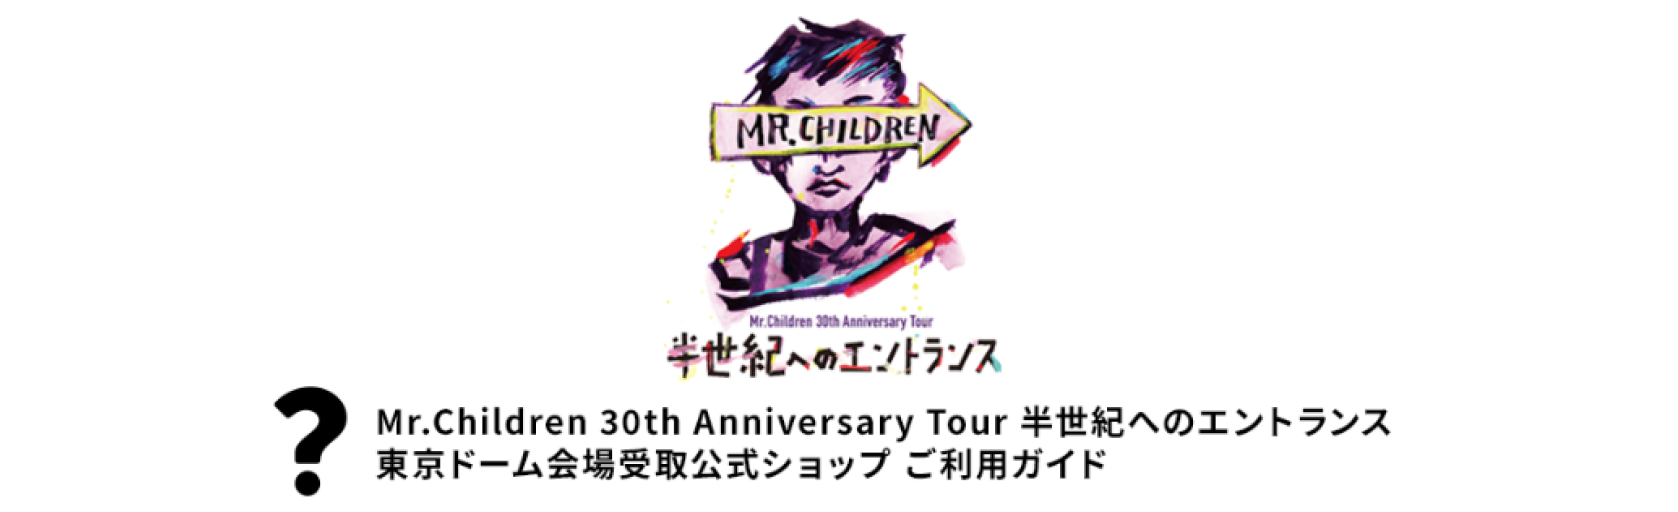 Mr.Children 30th Anniversary Tour 半世紀へのエントランス 東京ドーム会場受取公式ショップ